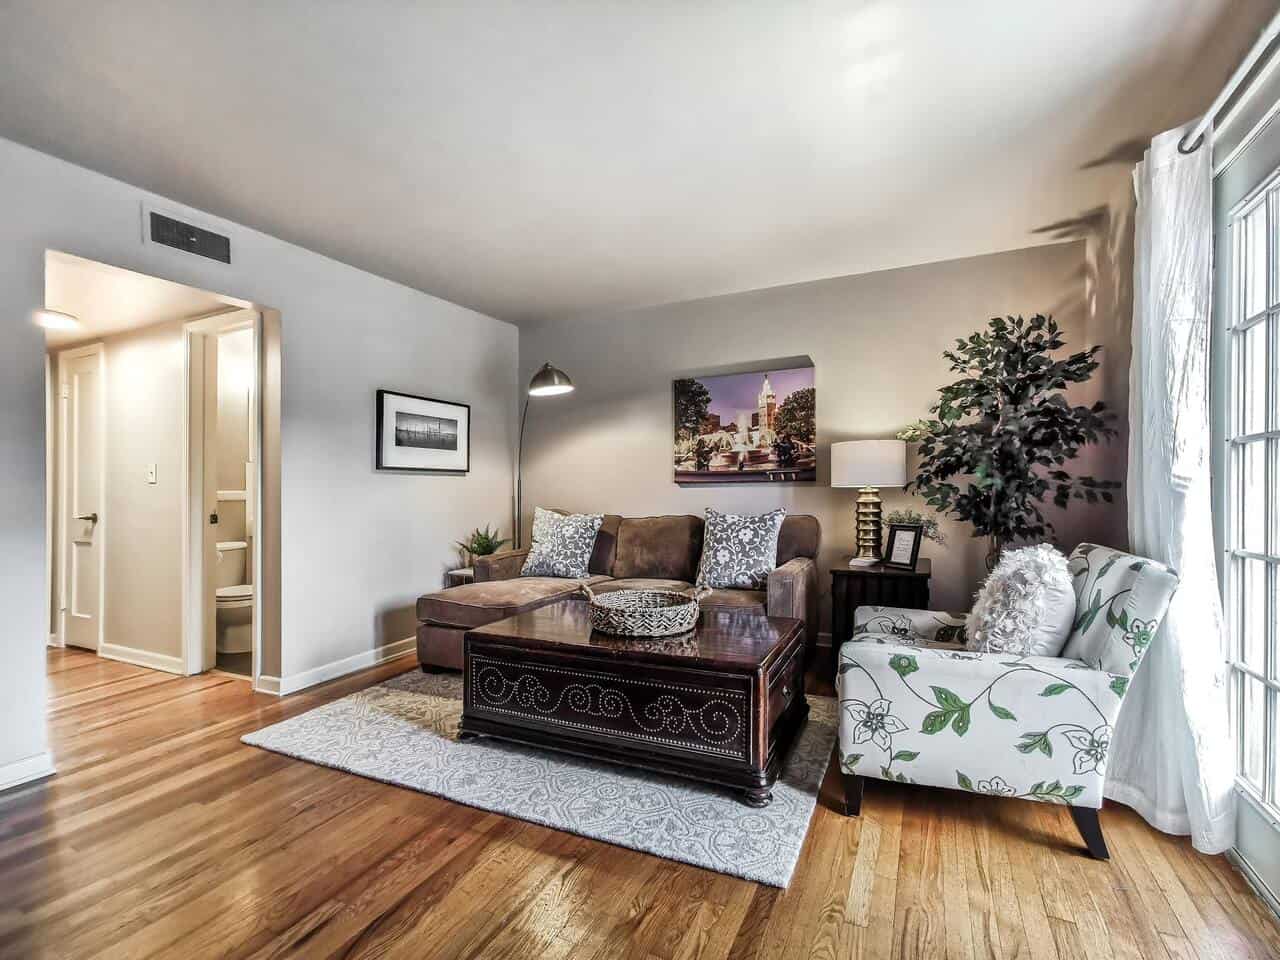 Image of Airbnb rental in Kansas City, Missouri